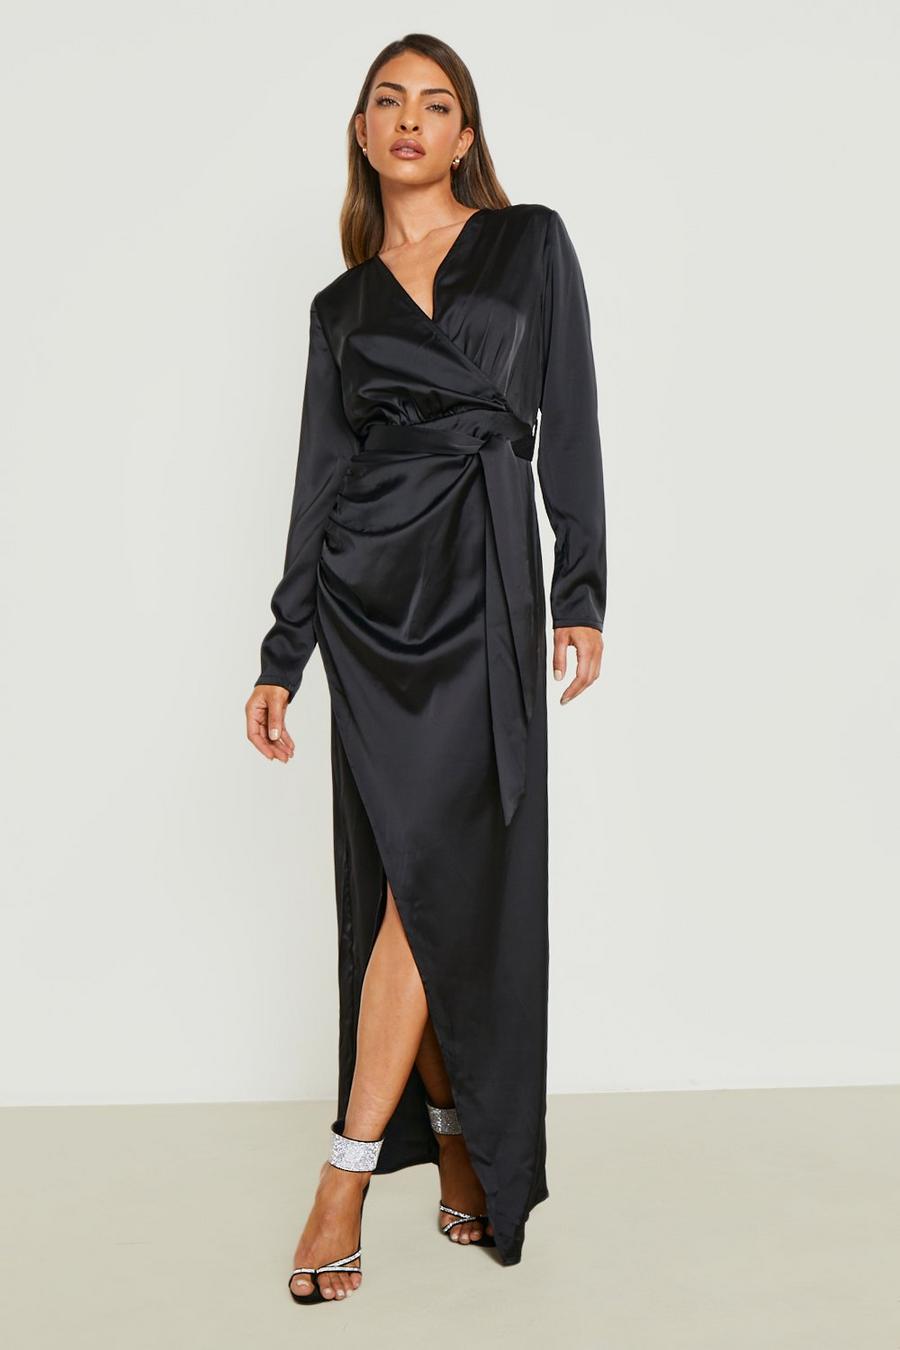 Black Satin Long Sleeve Wrap Front Maxi Dress